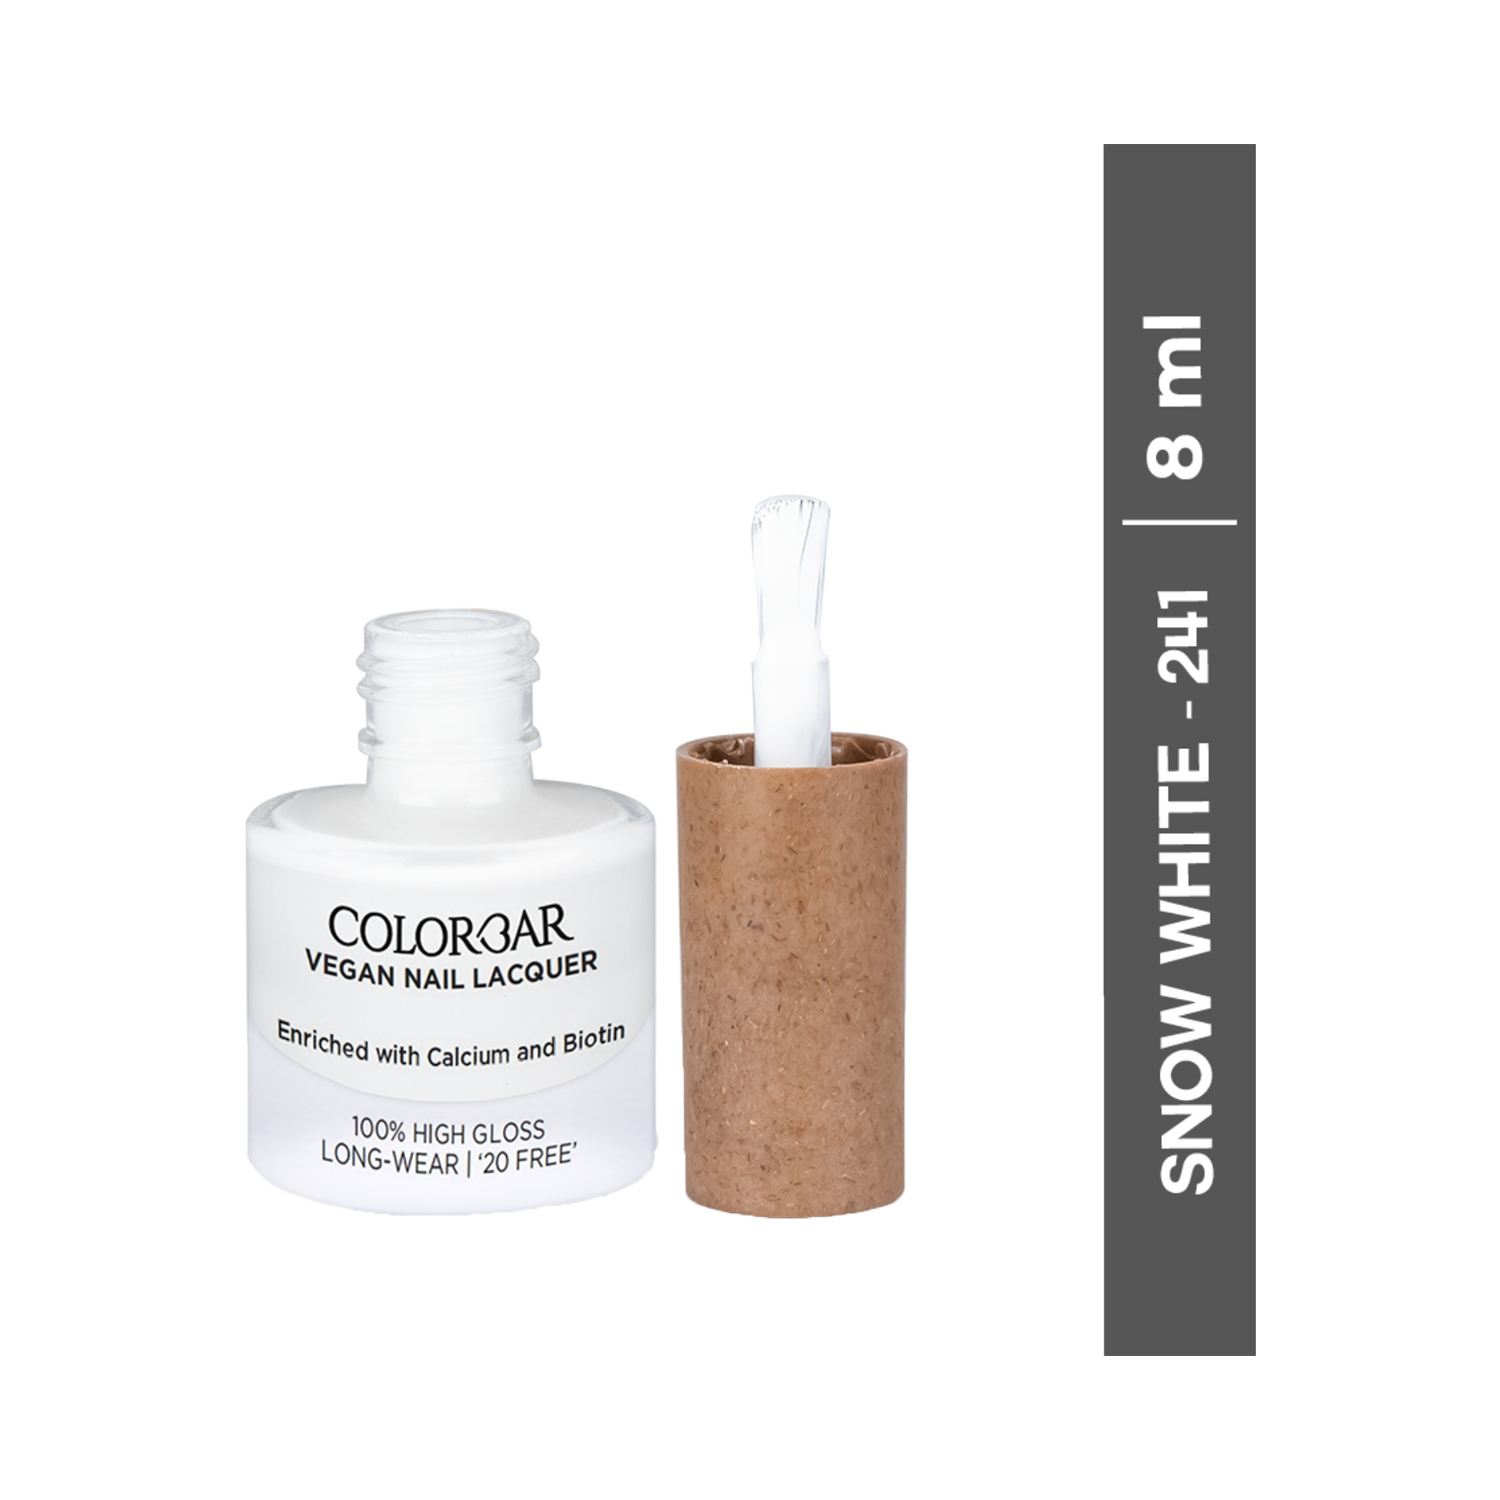 Colorbar Vegan Nail Lacquer - 241 Snow White (8 ml)